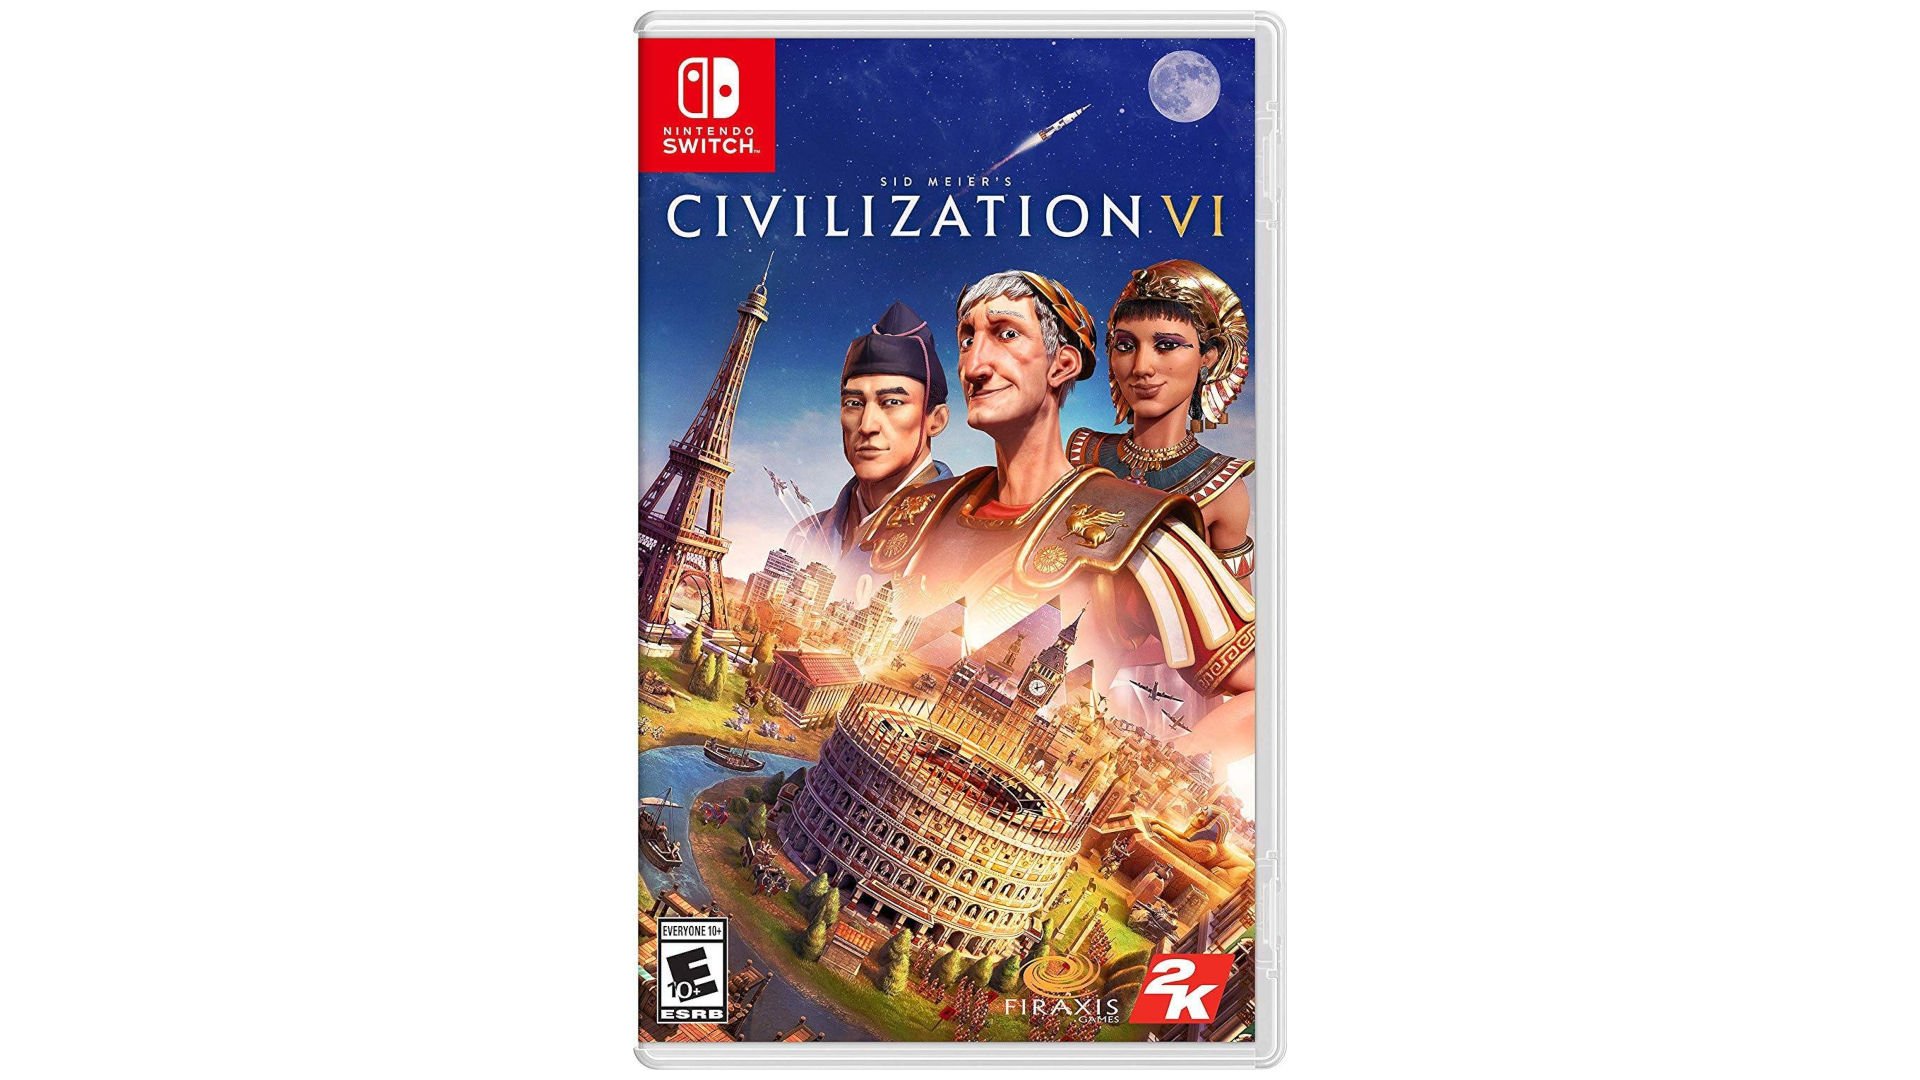 Civilization VI for Switch for under $10